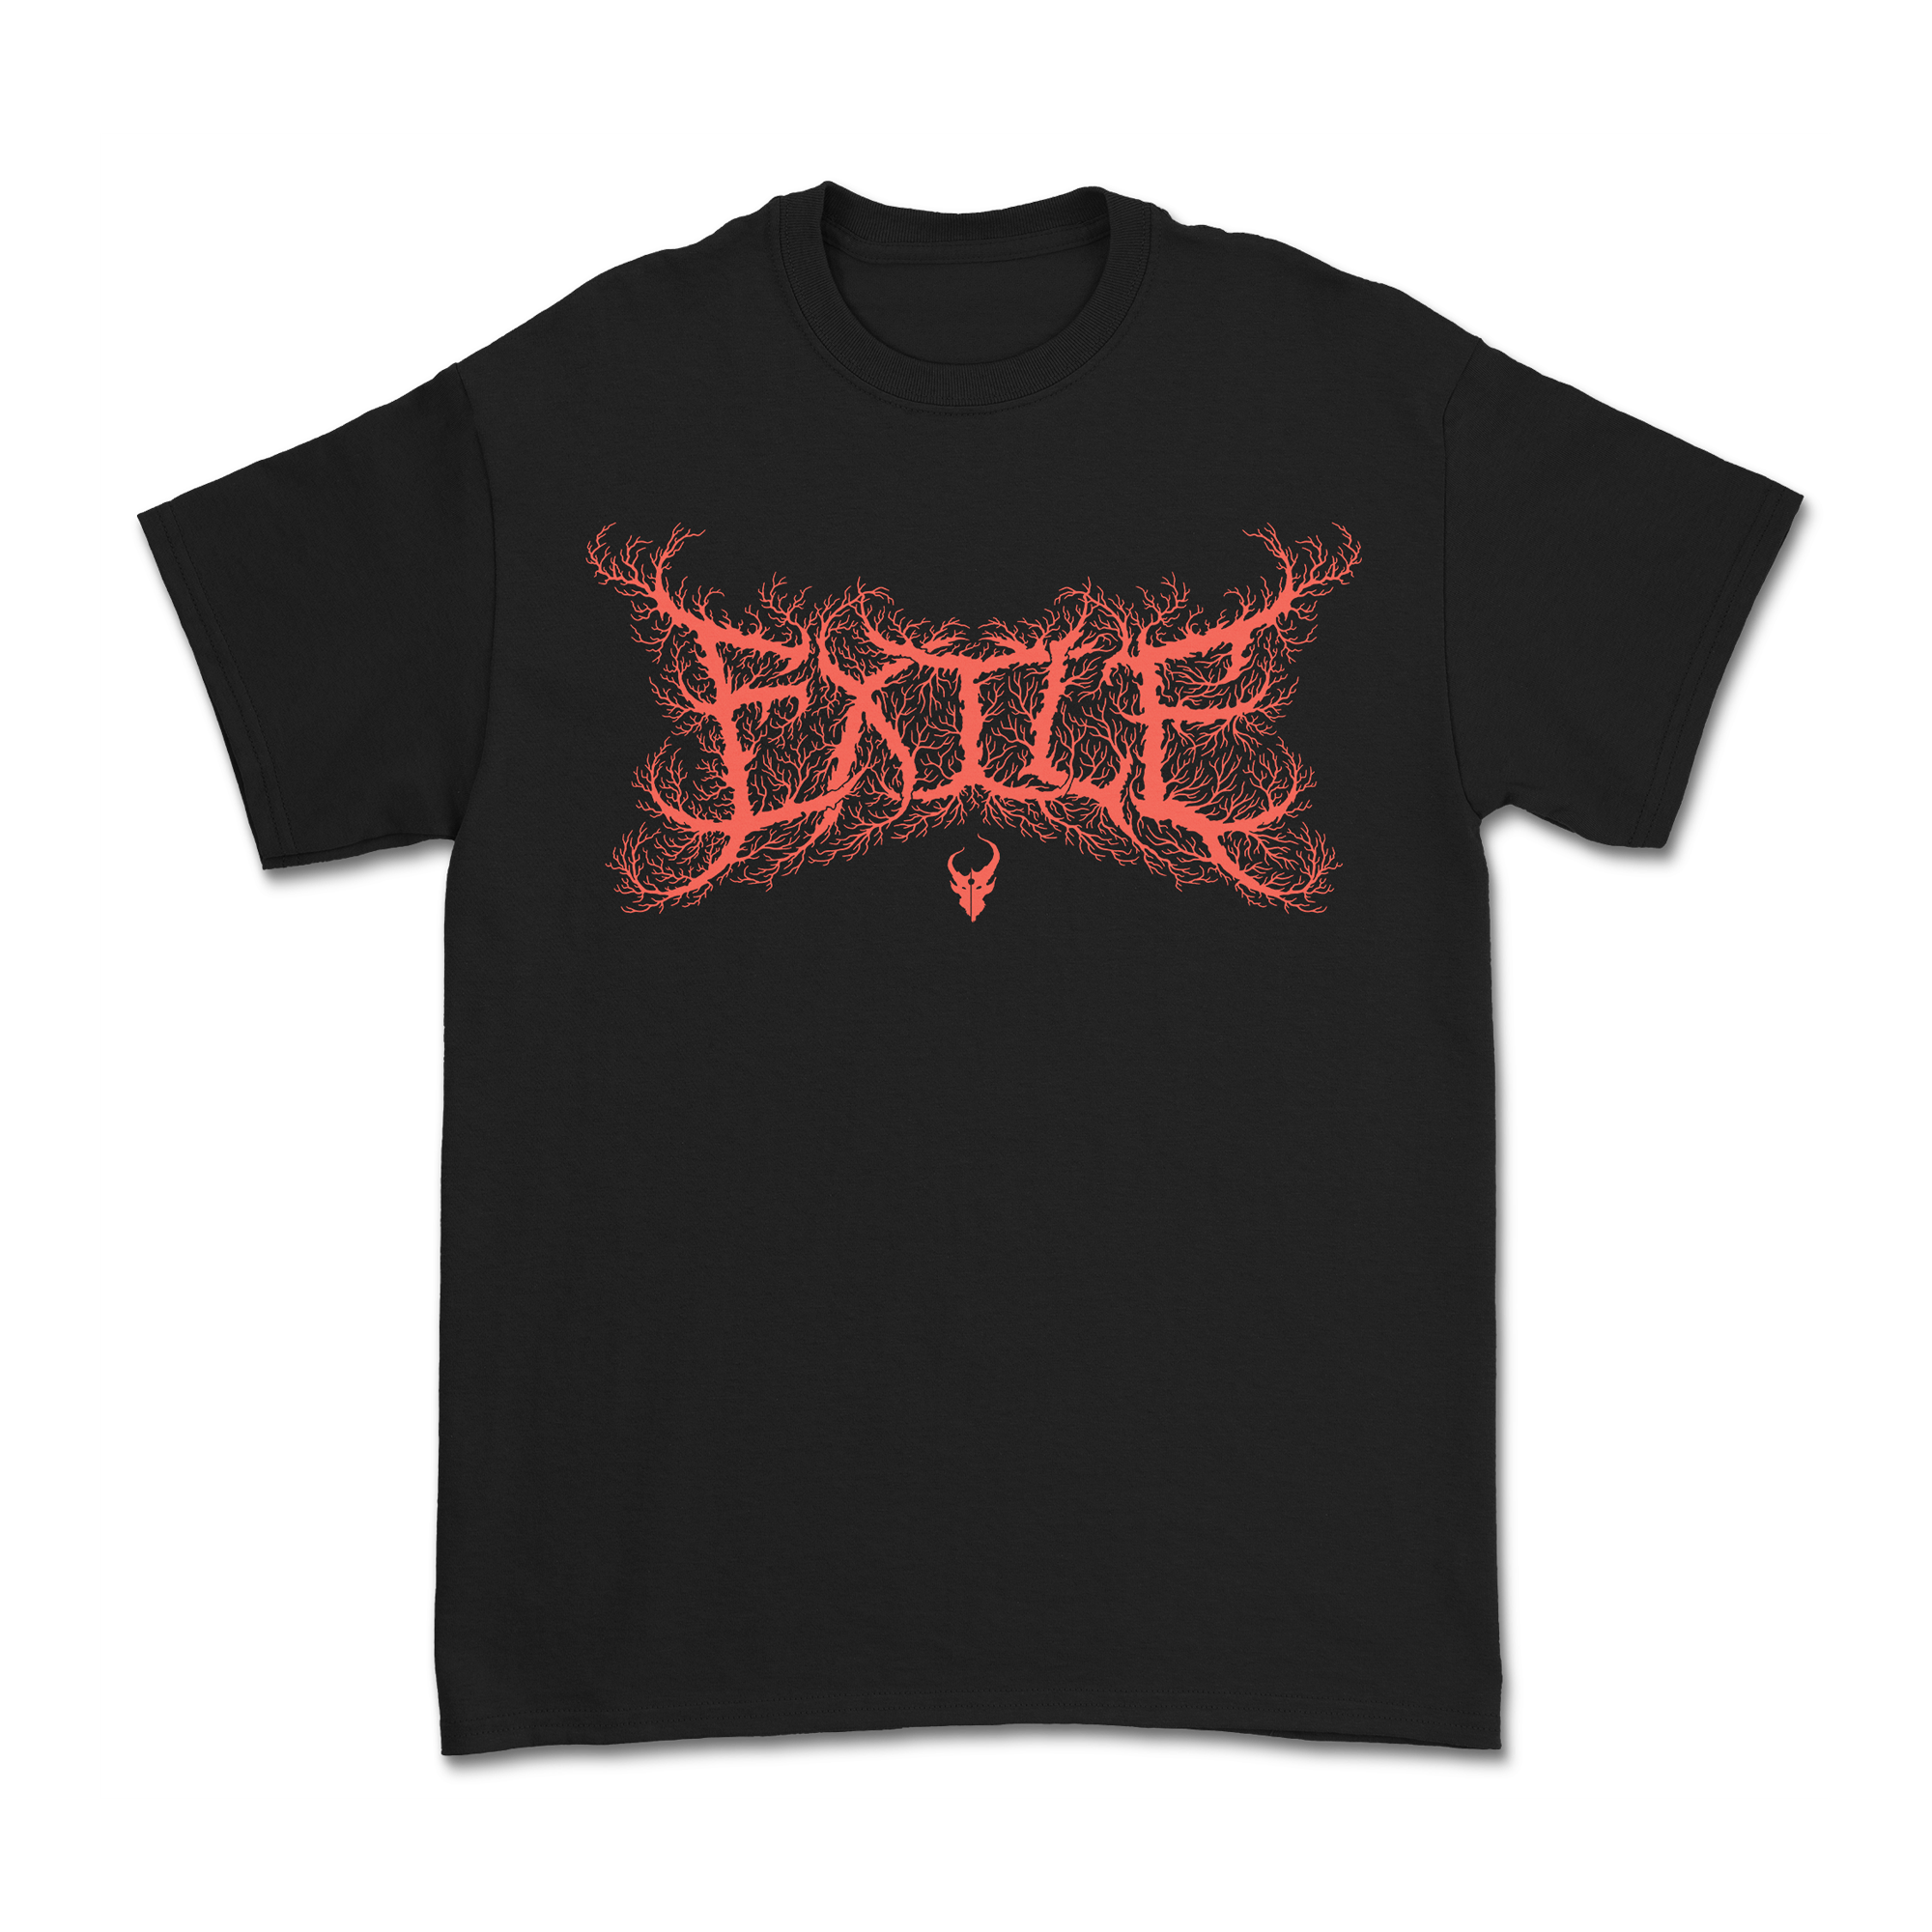 Exile T-Shirt